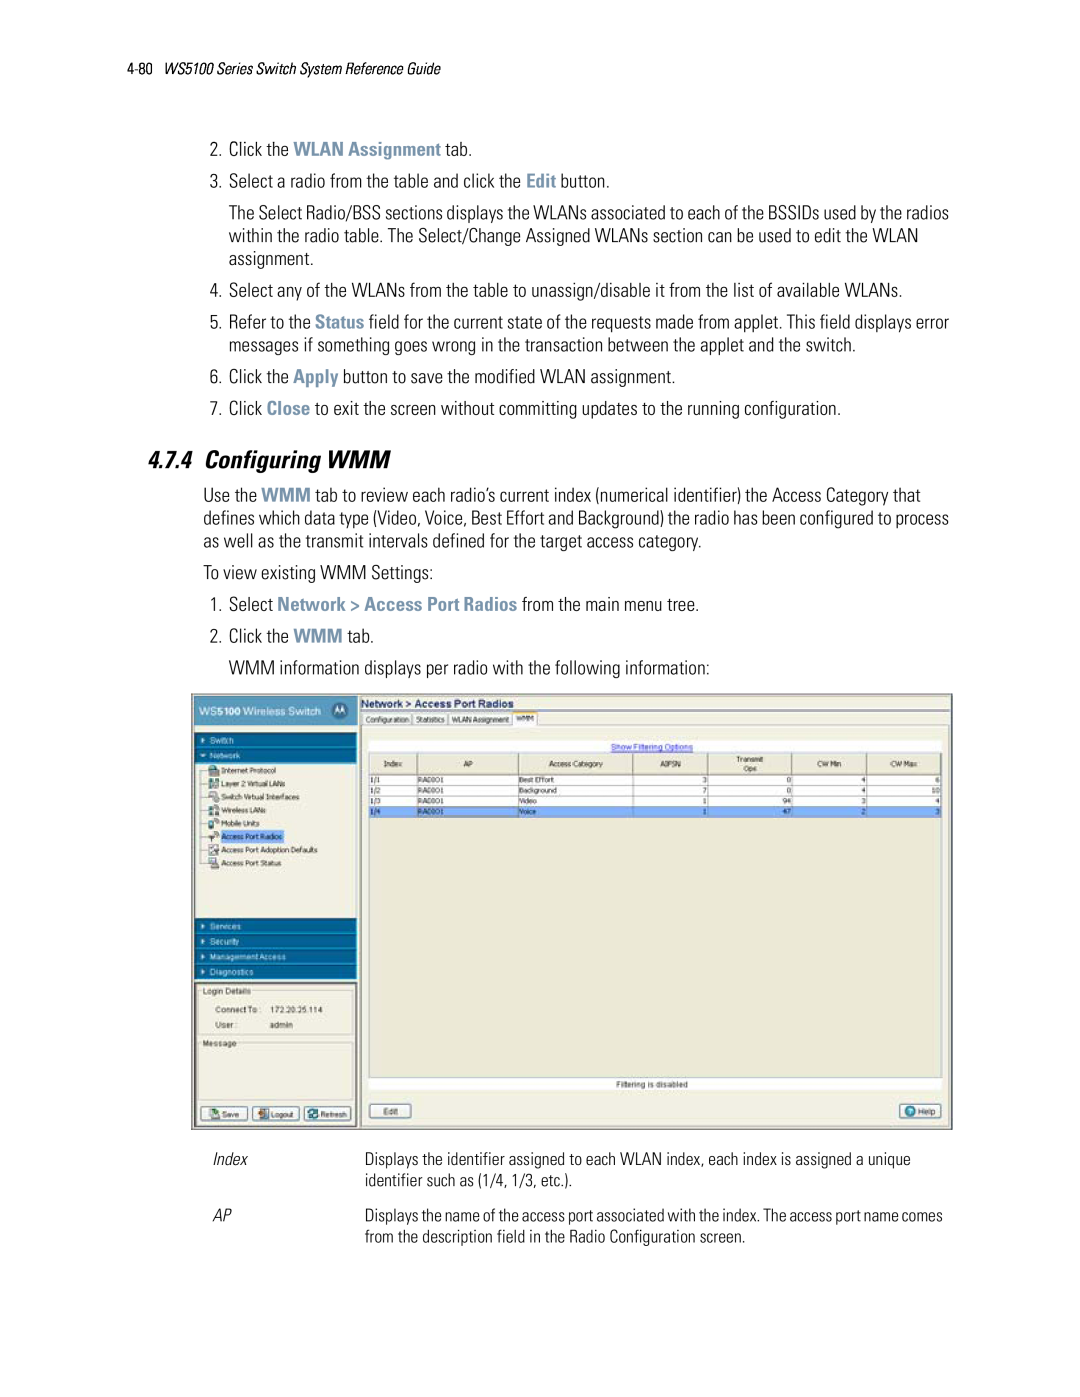 Motorola WS5100 manual 4.7.4Configuring WMM, Click the WLAN Assignment tab 